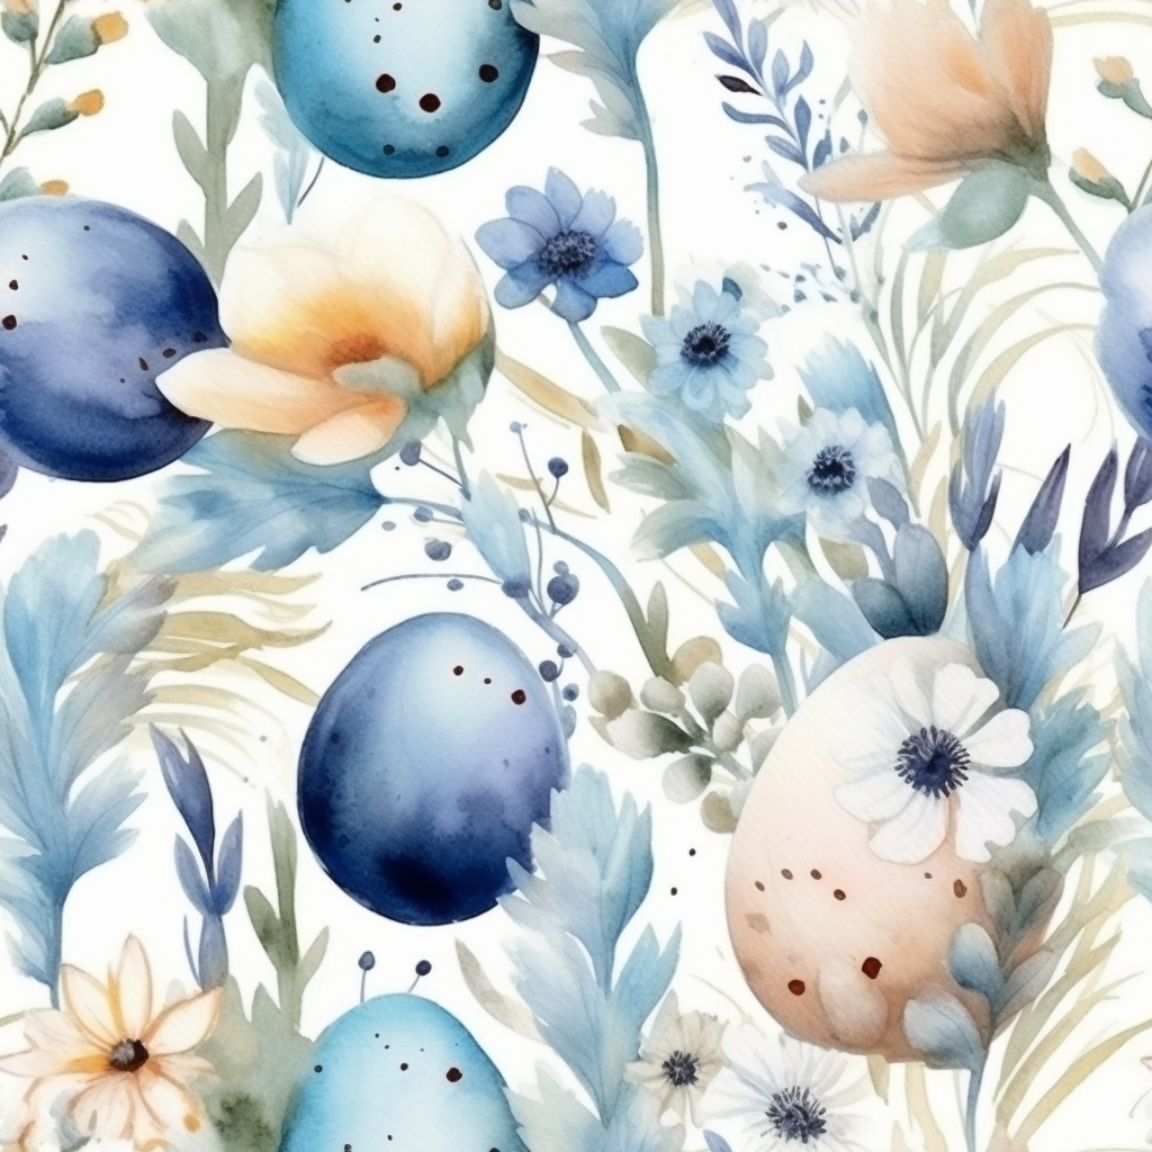 Light Watercolor Easter Floral Digital Paper Bundle - 10 Seamless Patterns